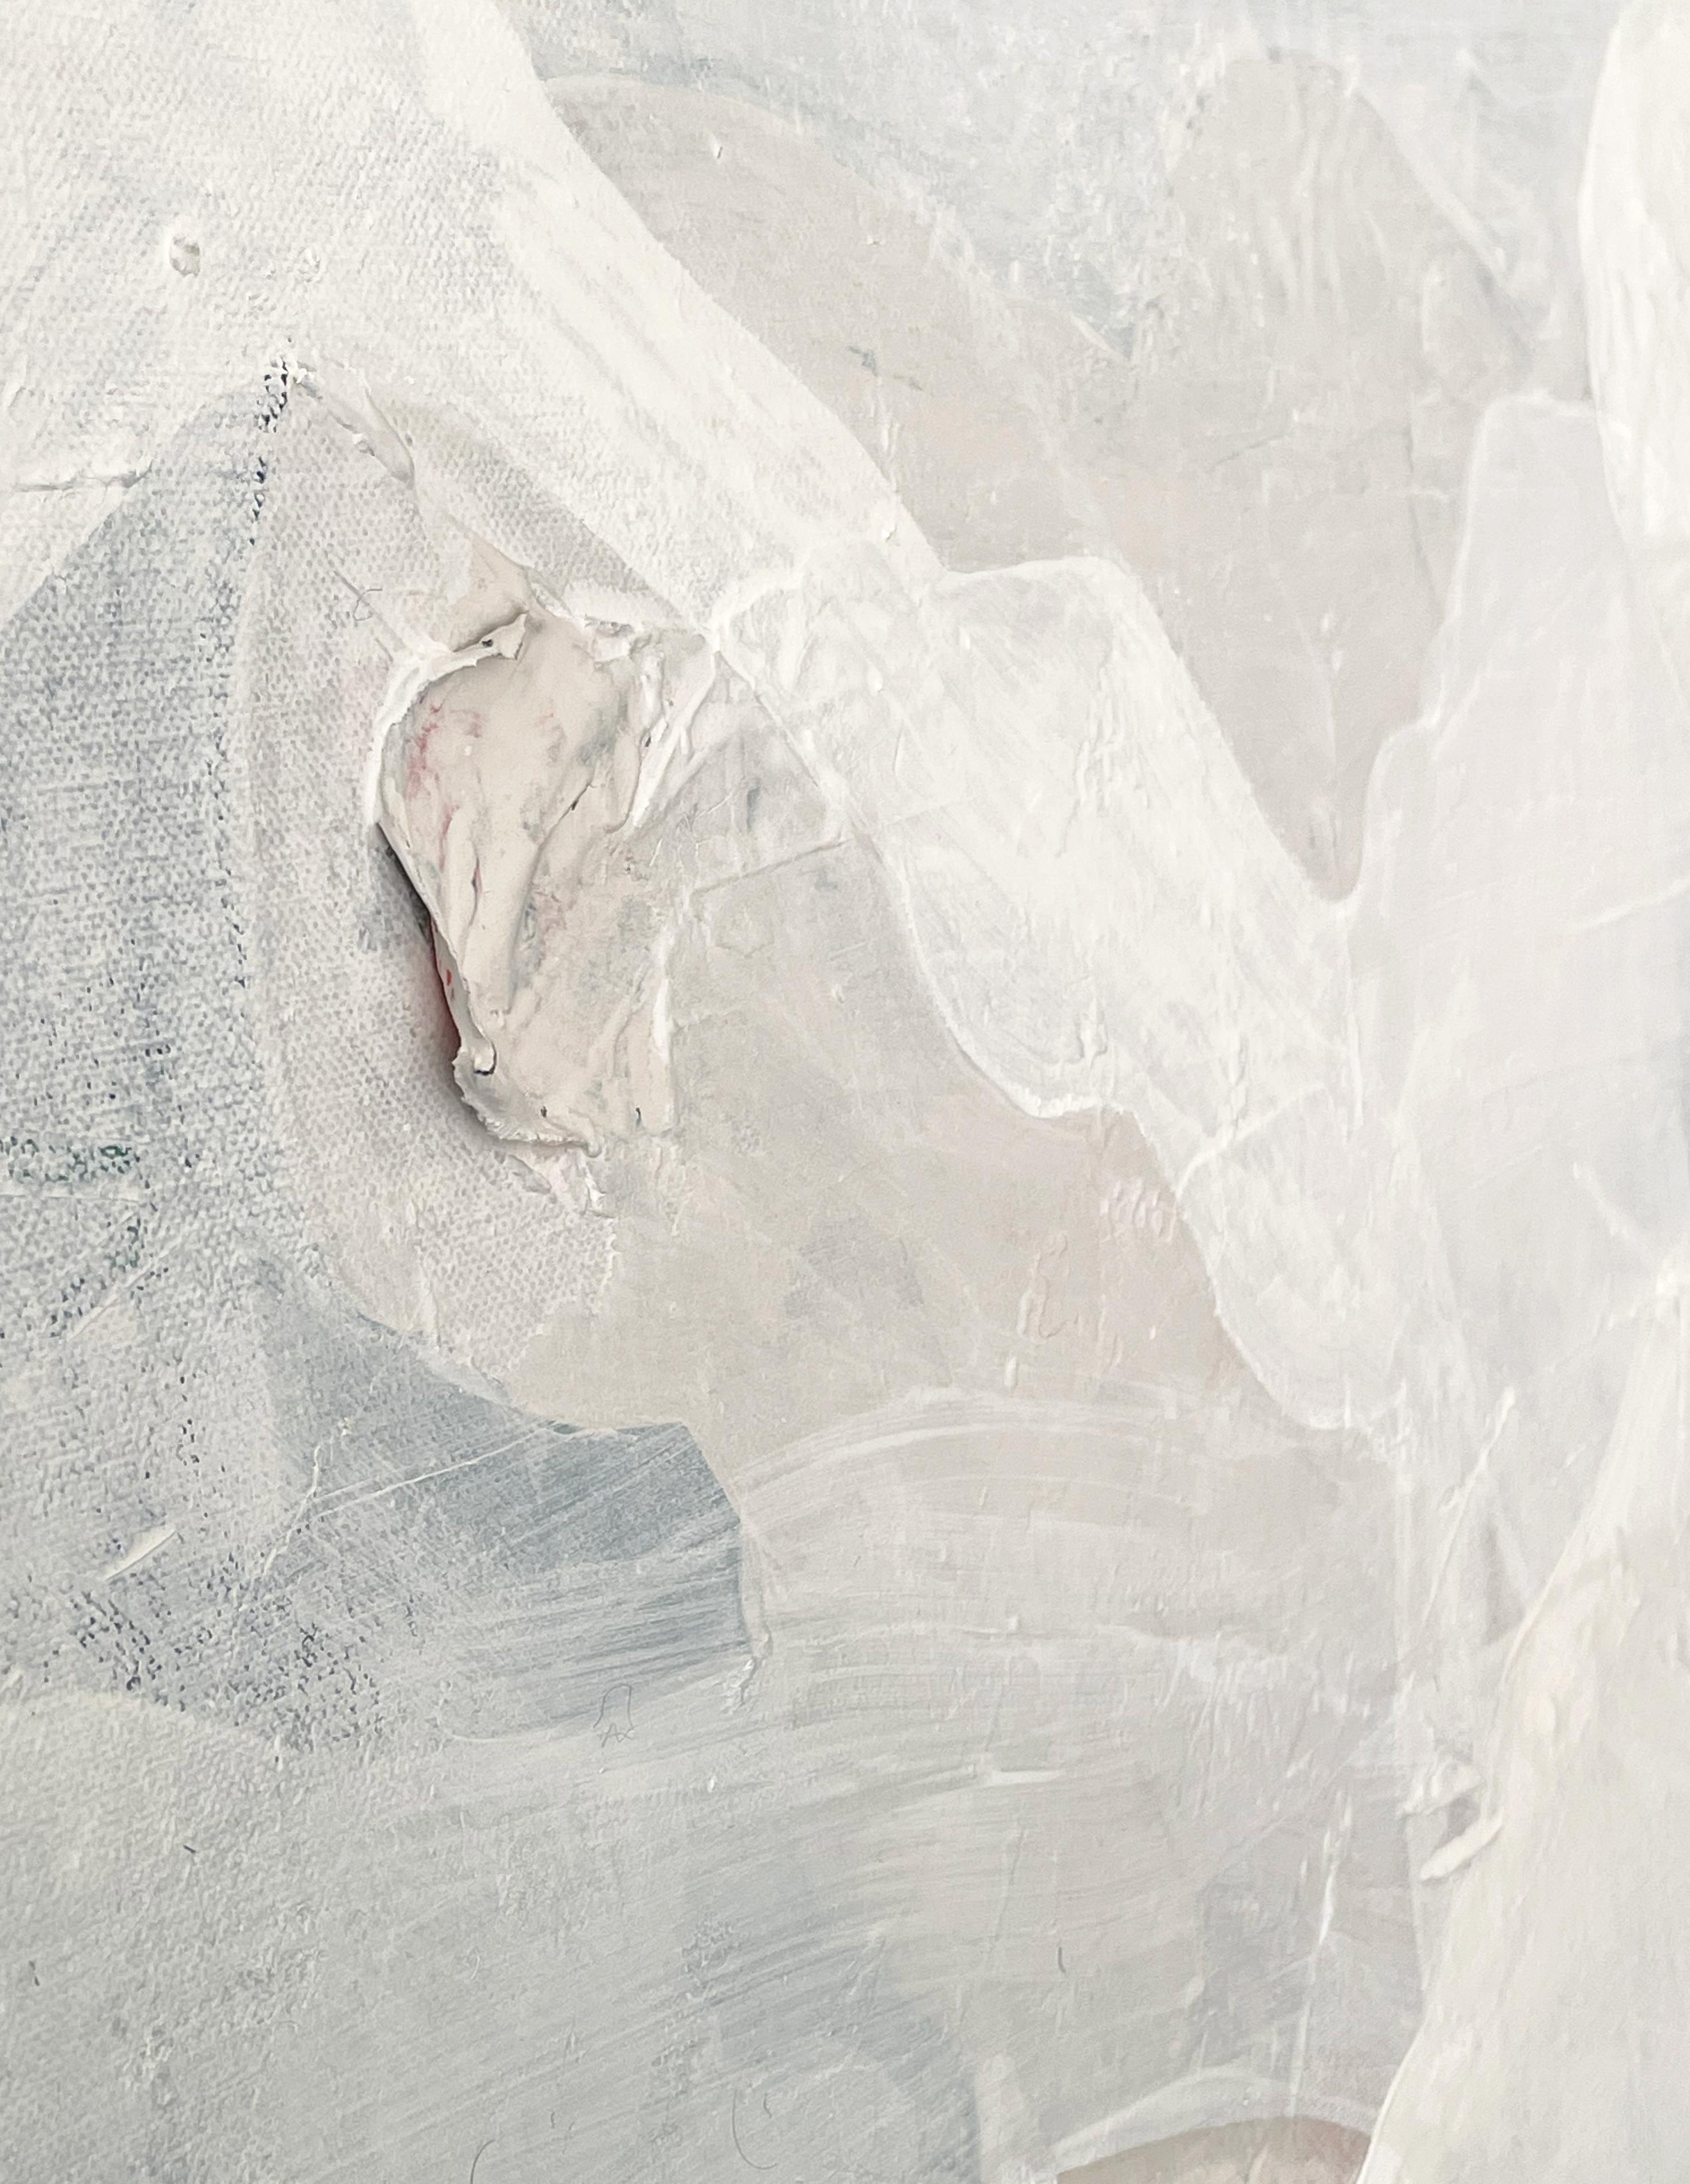 White Noise - Abstract Mixed Media Art by Joanna Cutri